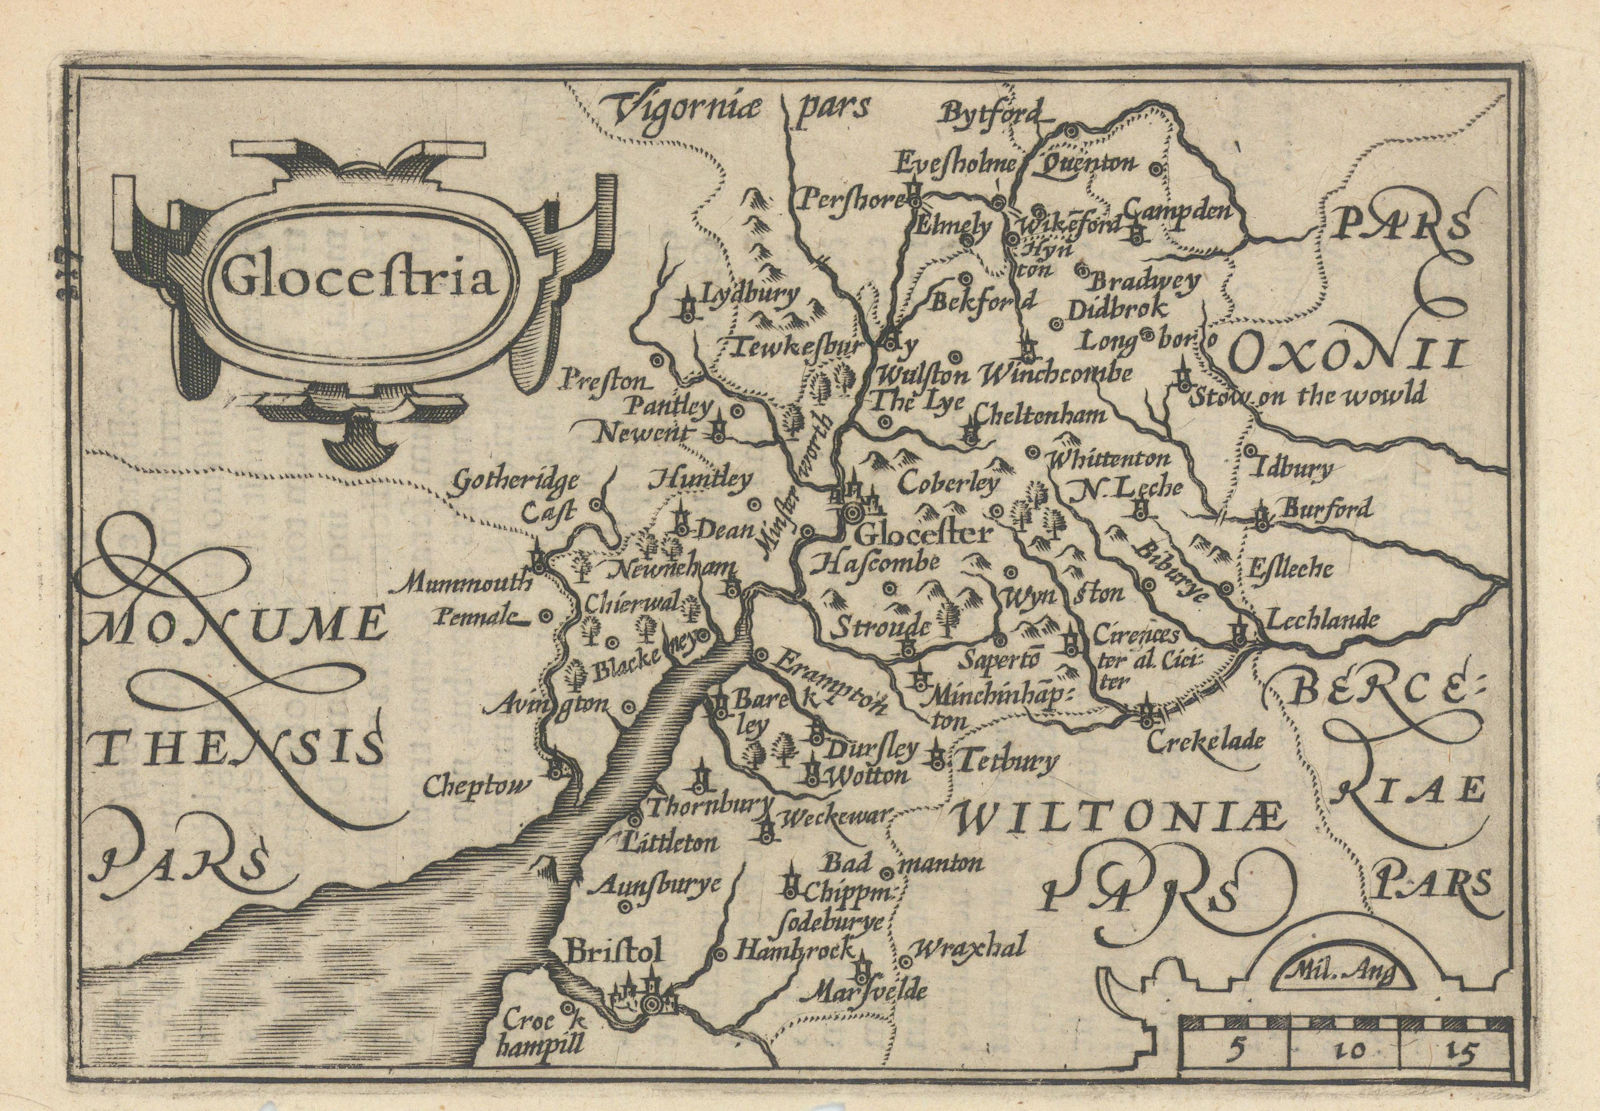 Associate Product Glocestria by van den Keere. "Speed miniature" Gloucestershire county map 1617